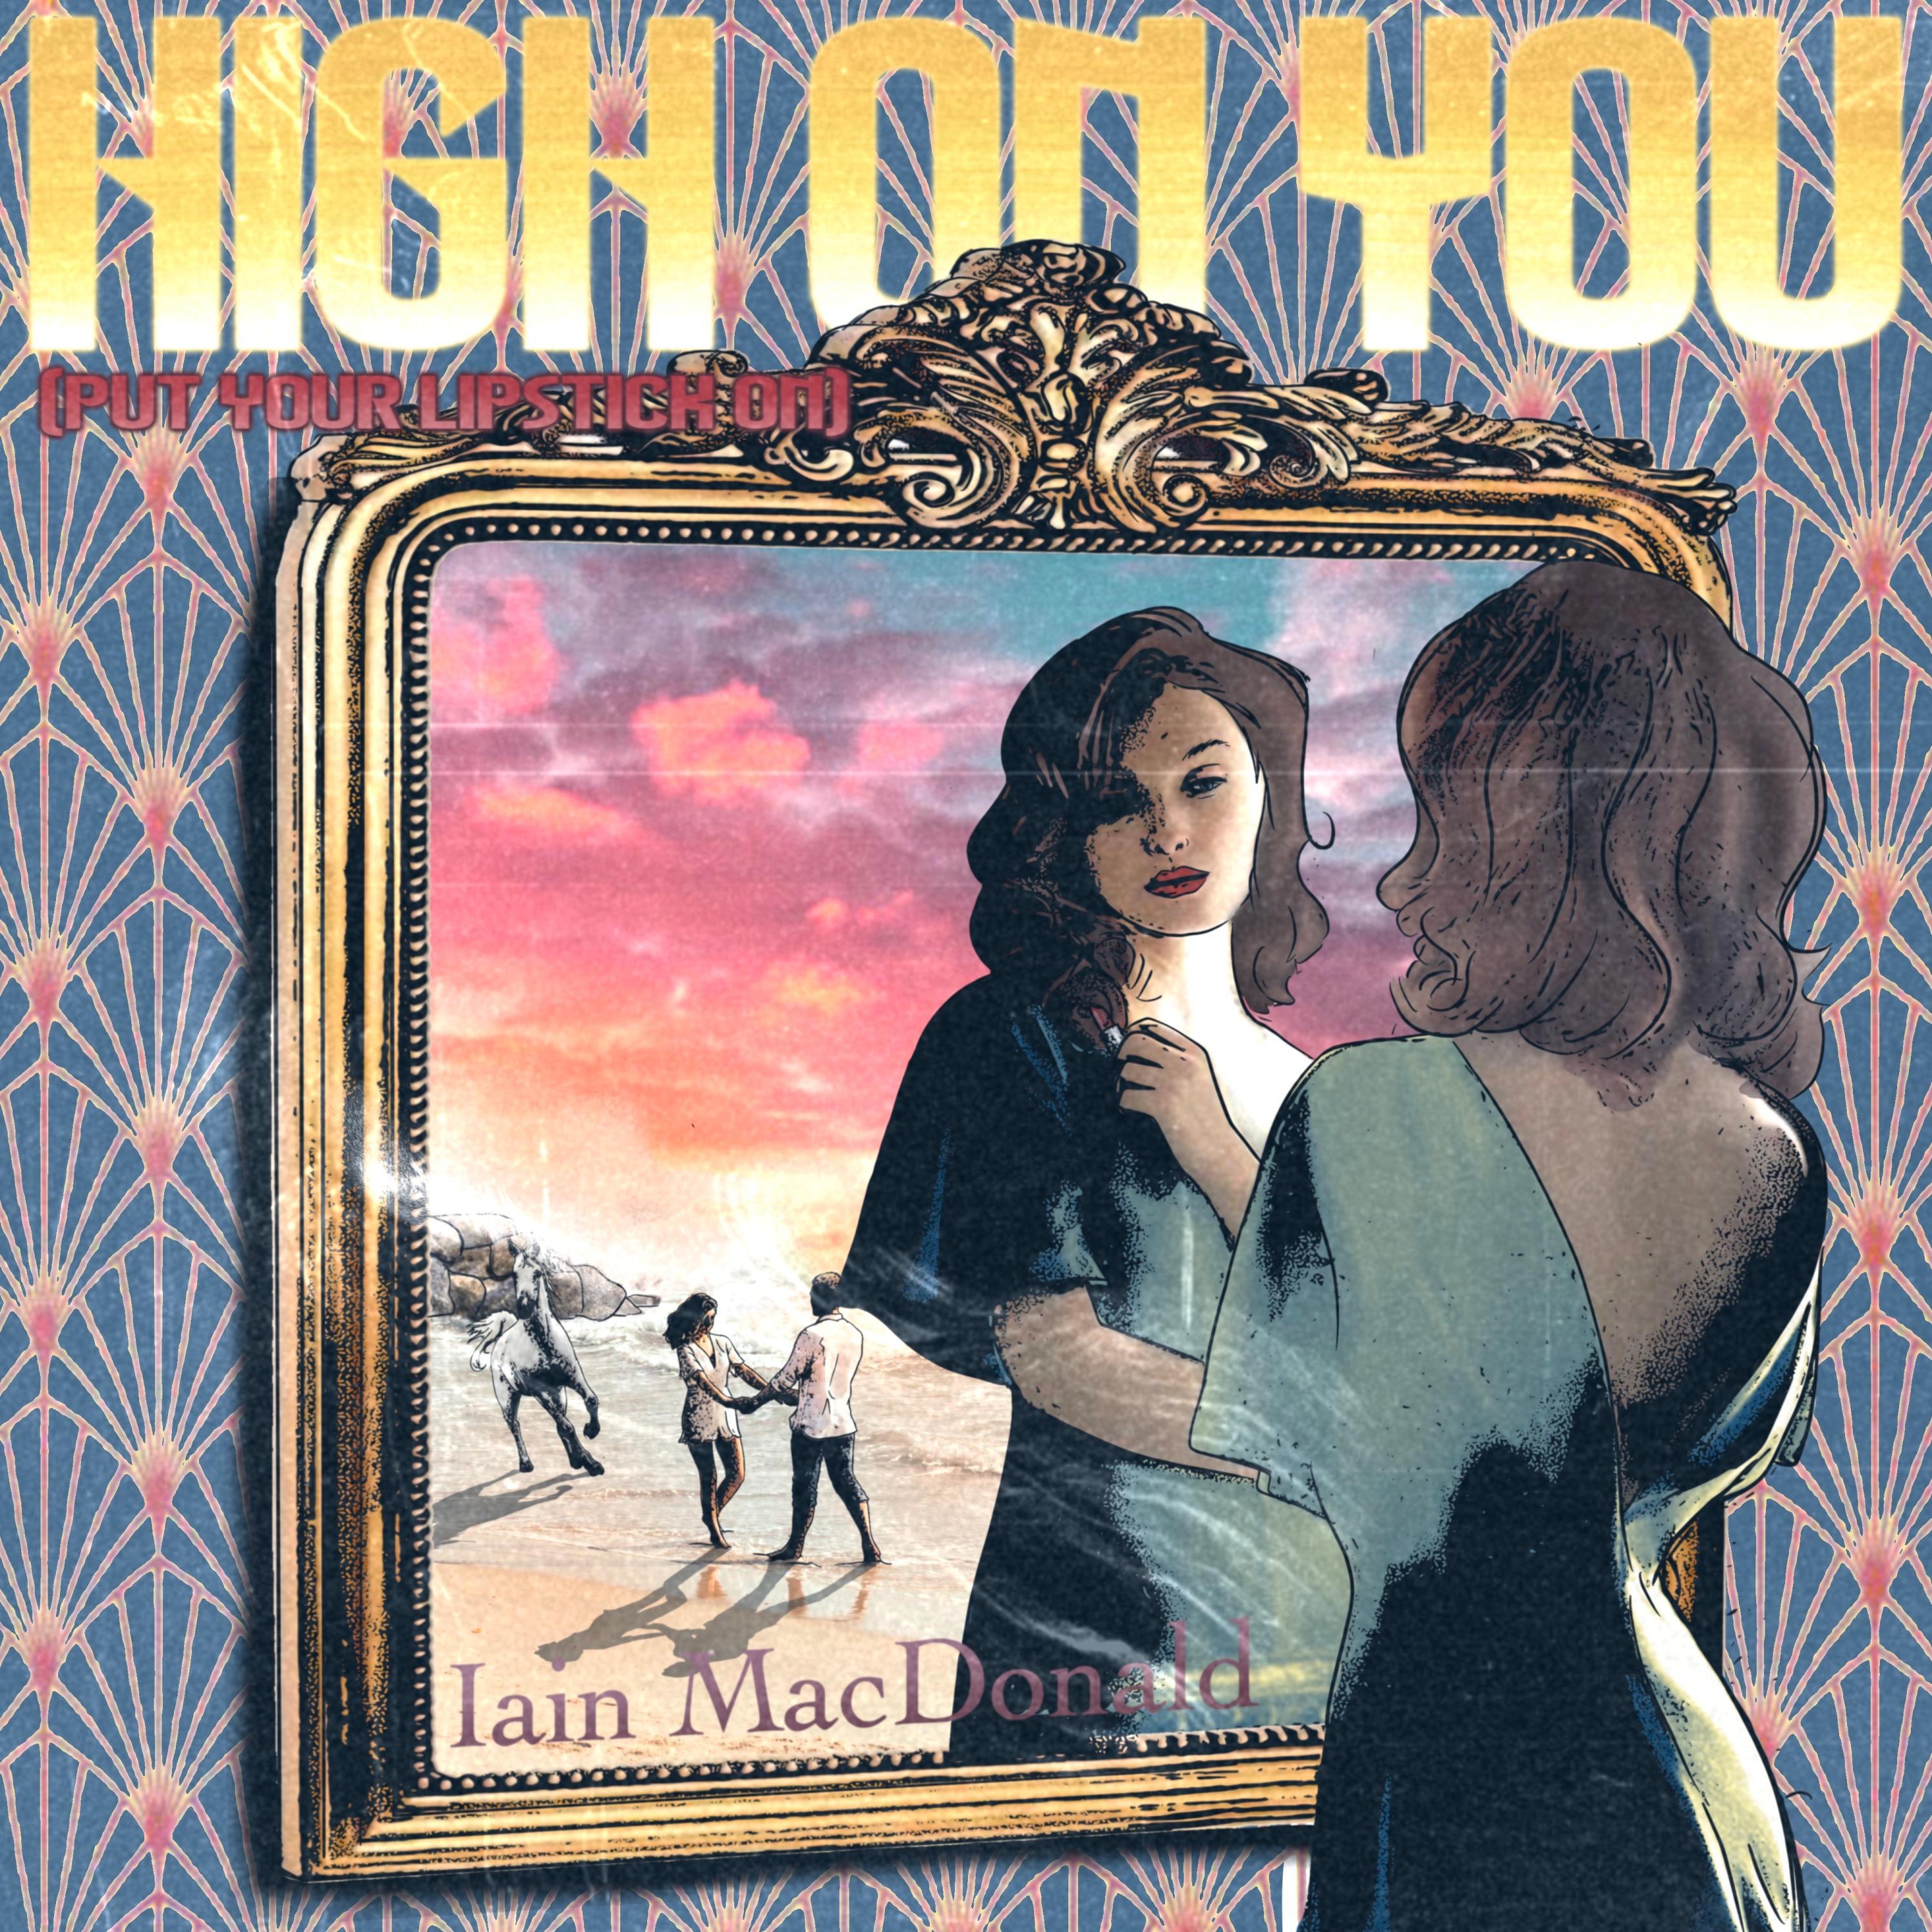 Iain MacDonald - High on You (Put Your Lipstick On)